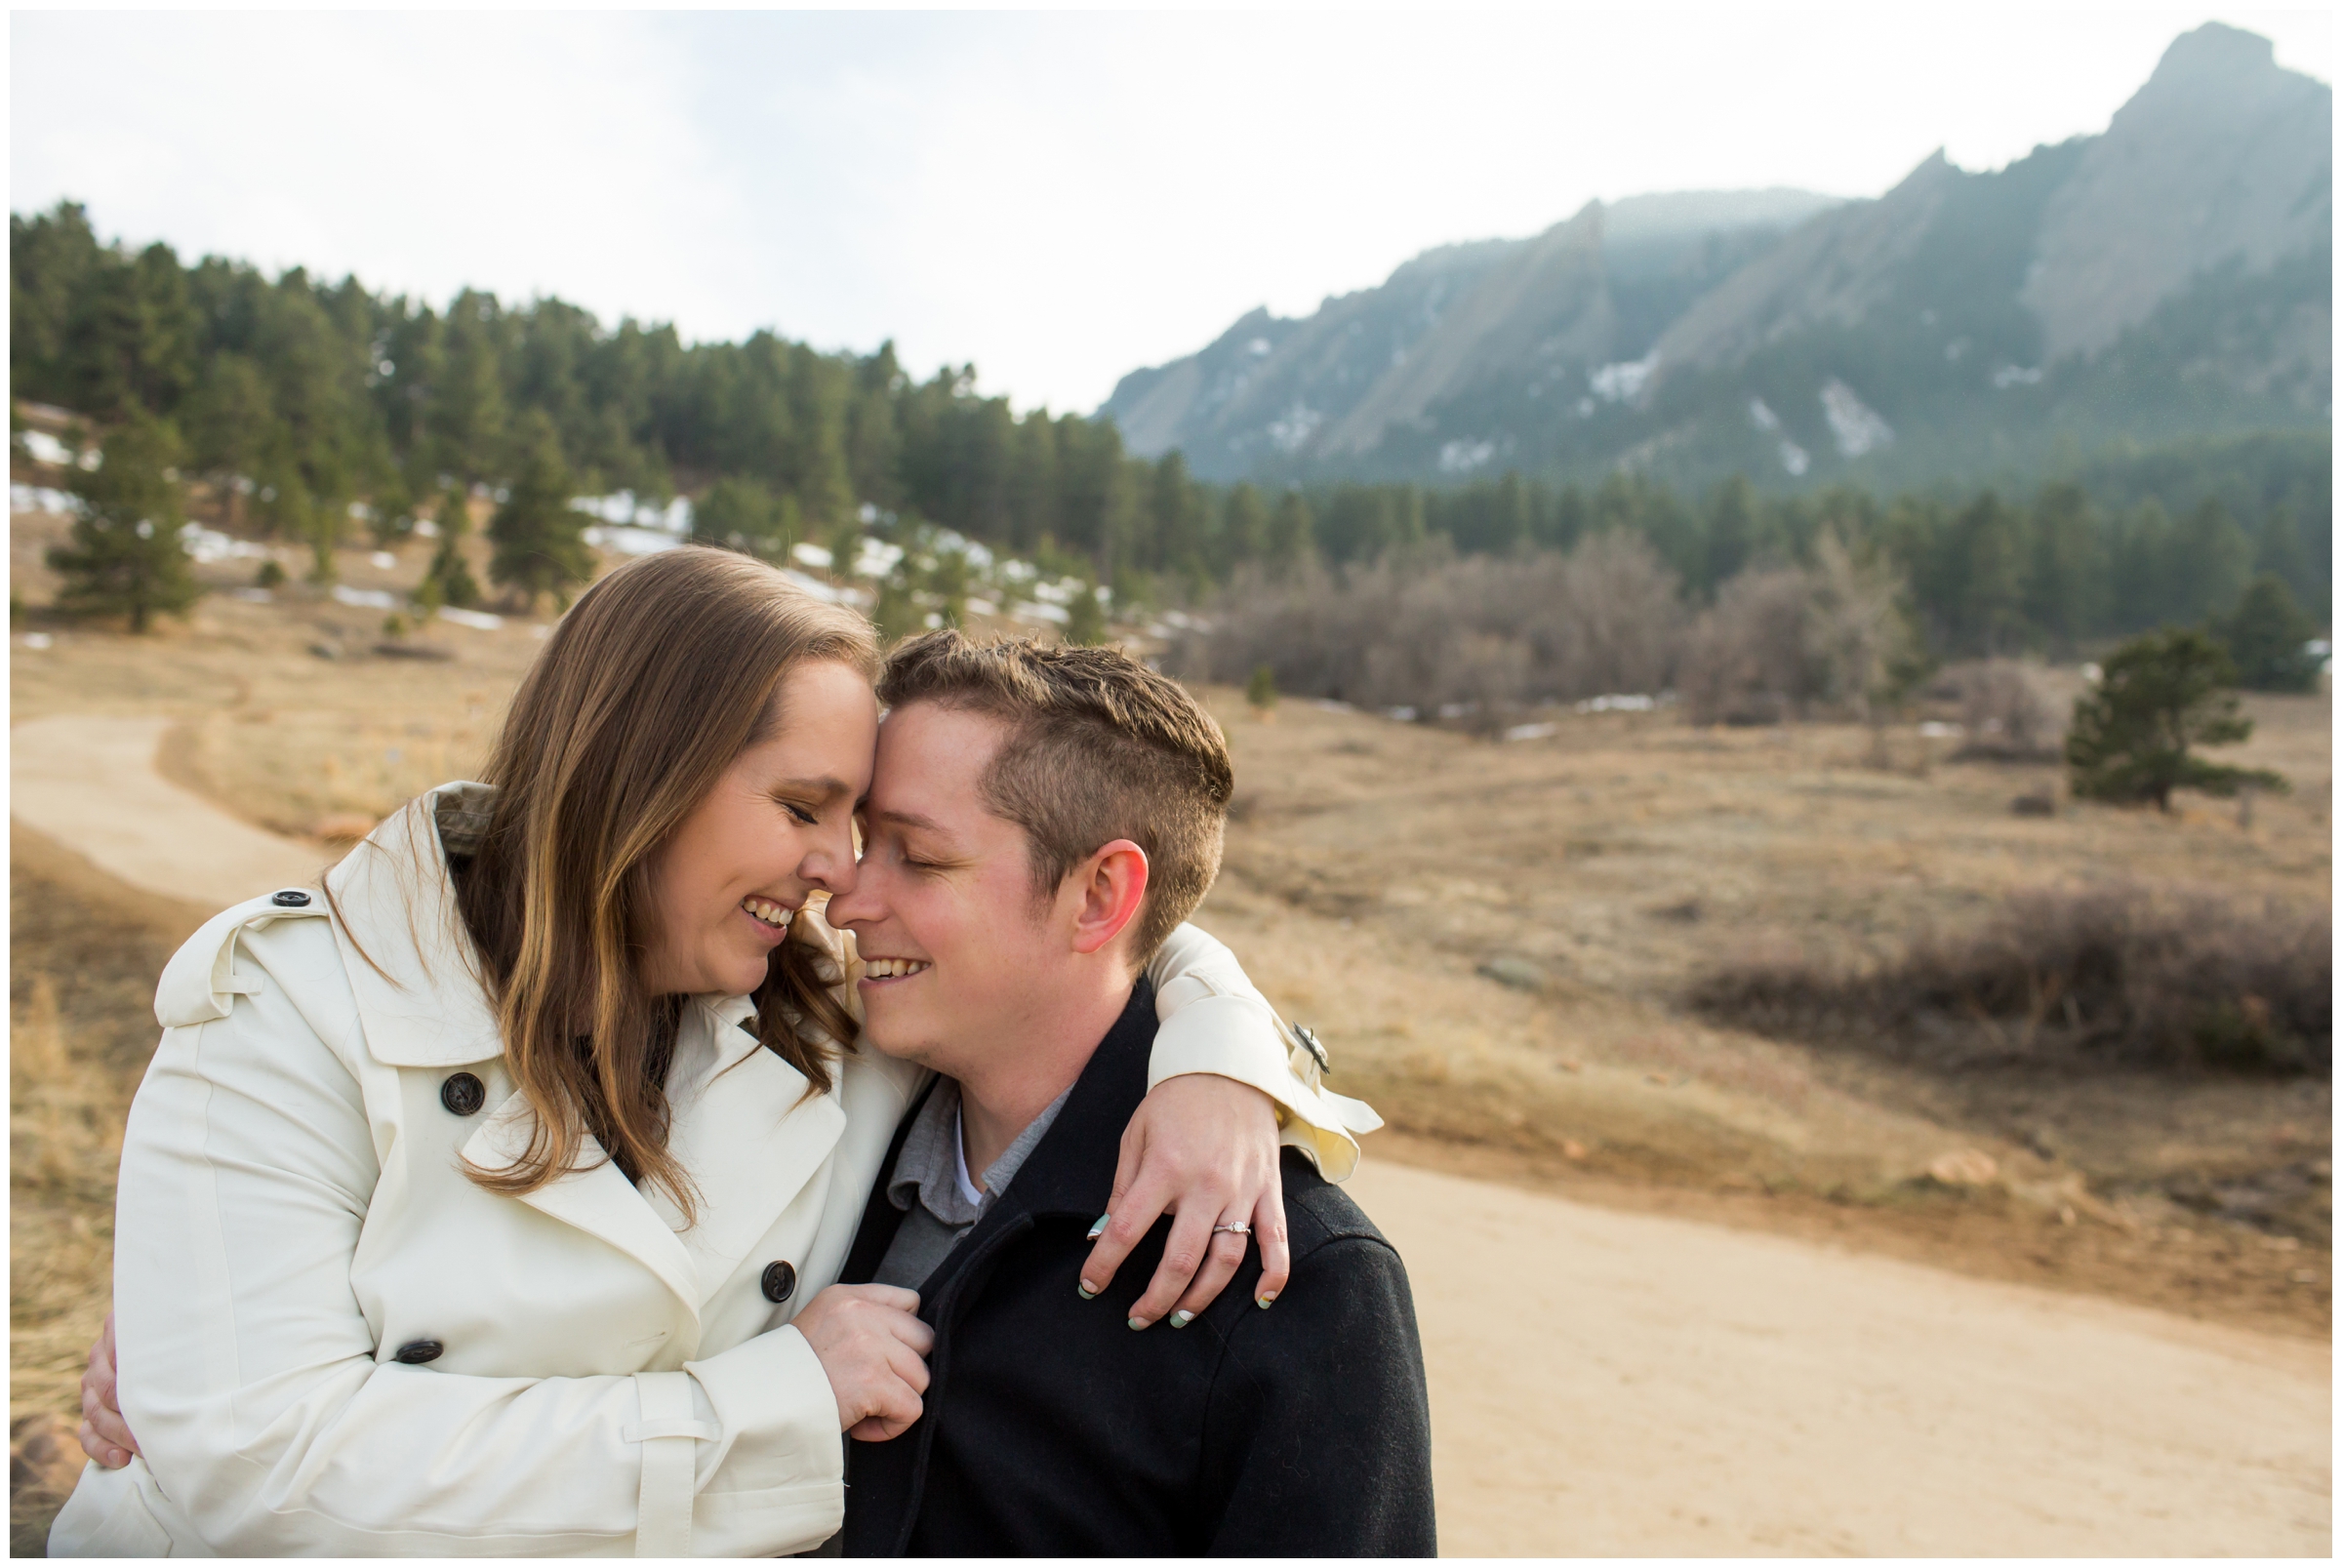 Chautauqua Park Boulder couple's portraits with mountains in background 